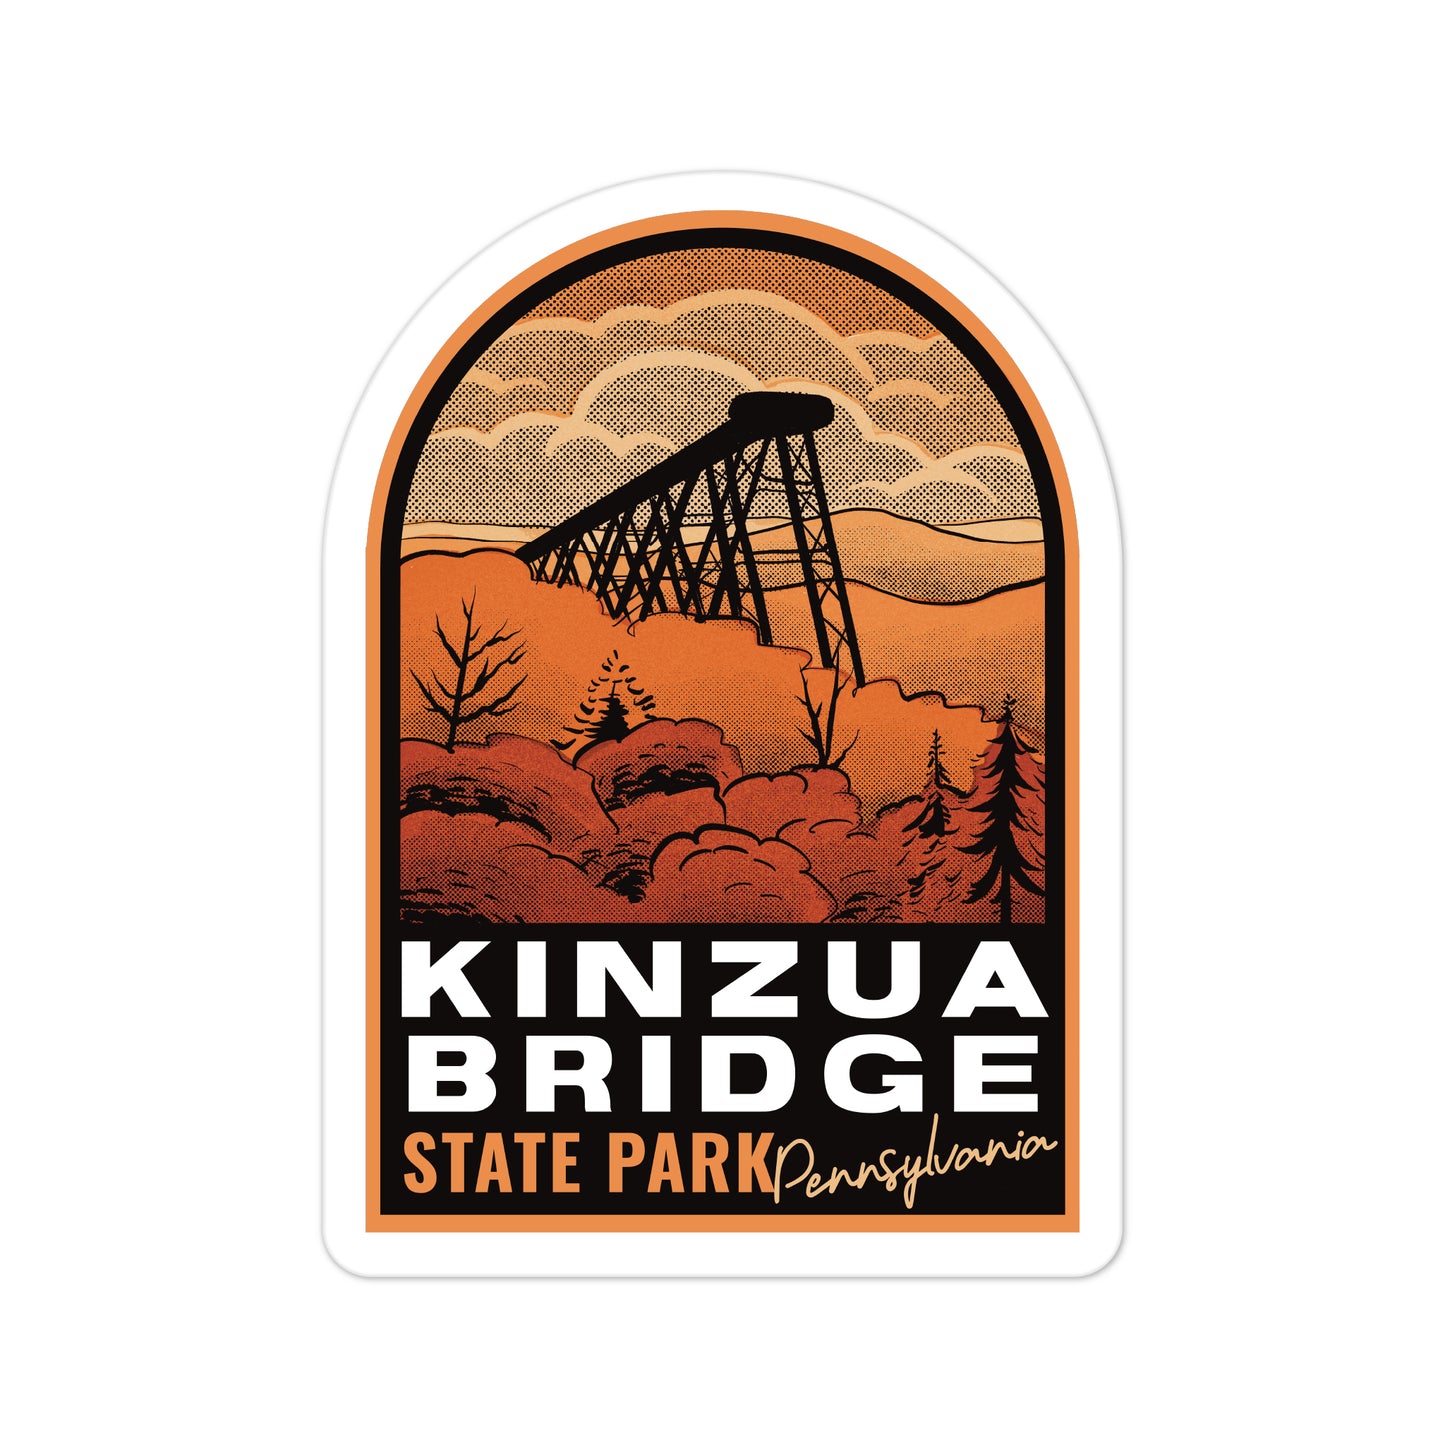 A sticker of Kinzua Bridge State Park